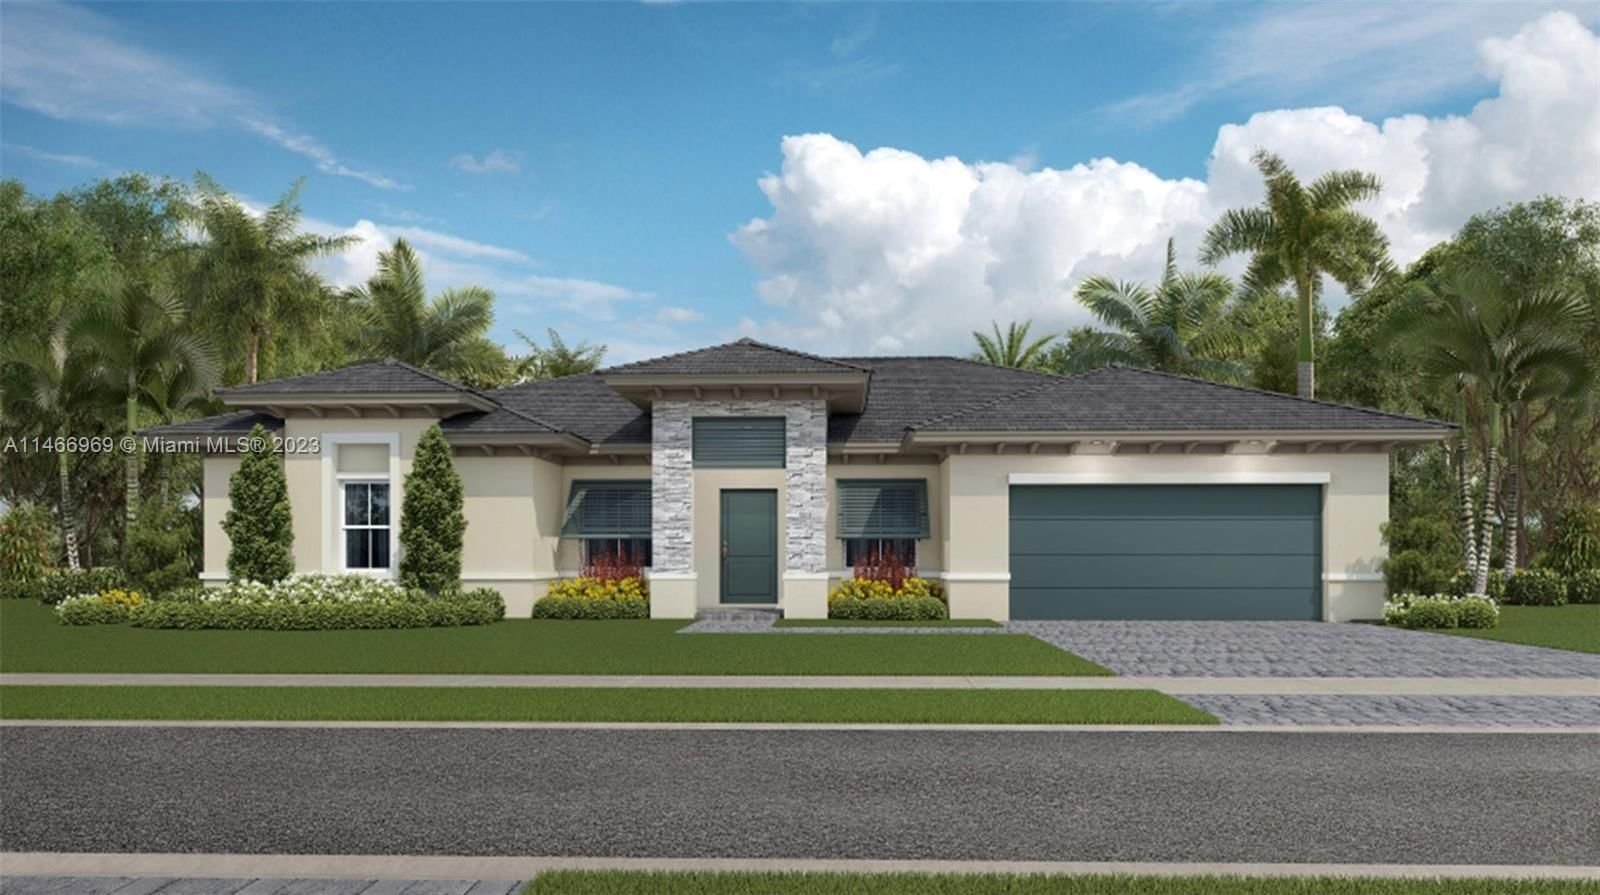 Real estate property located at 29040 169 ave, Miami-Dade County, Miami, FL